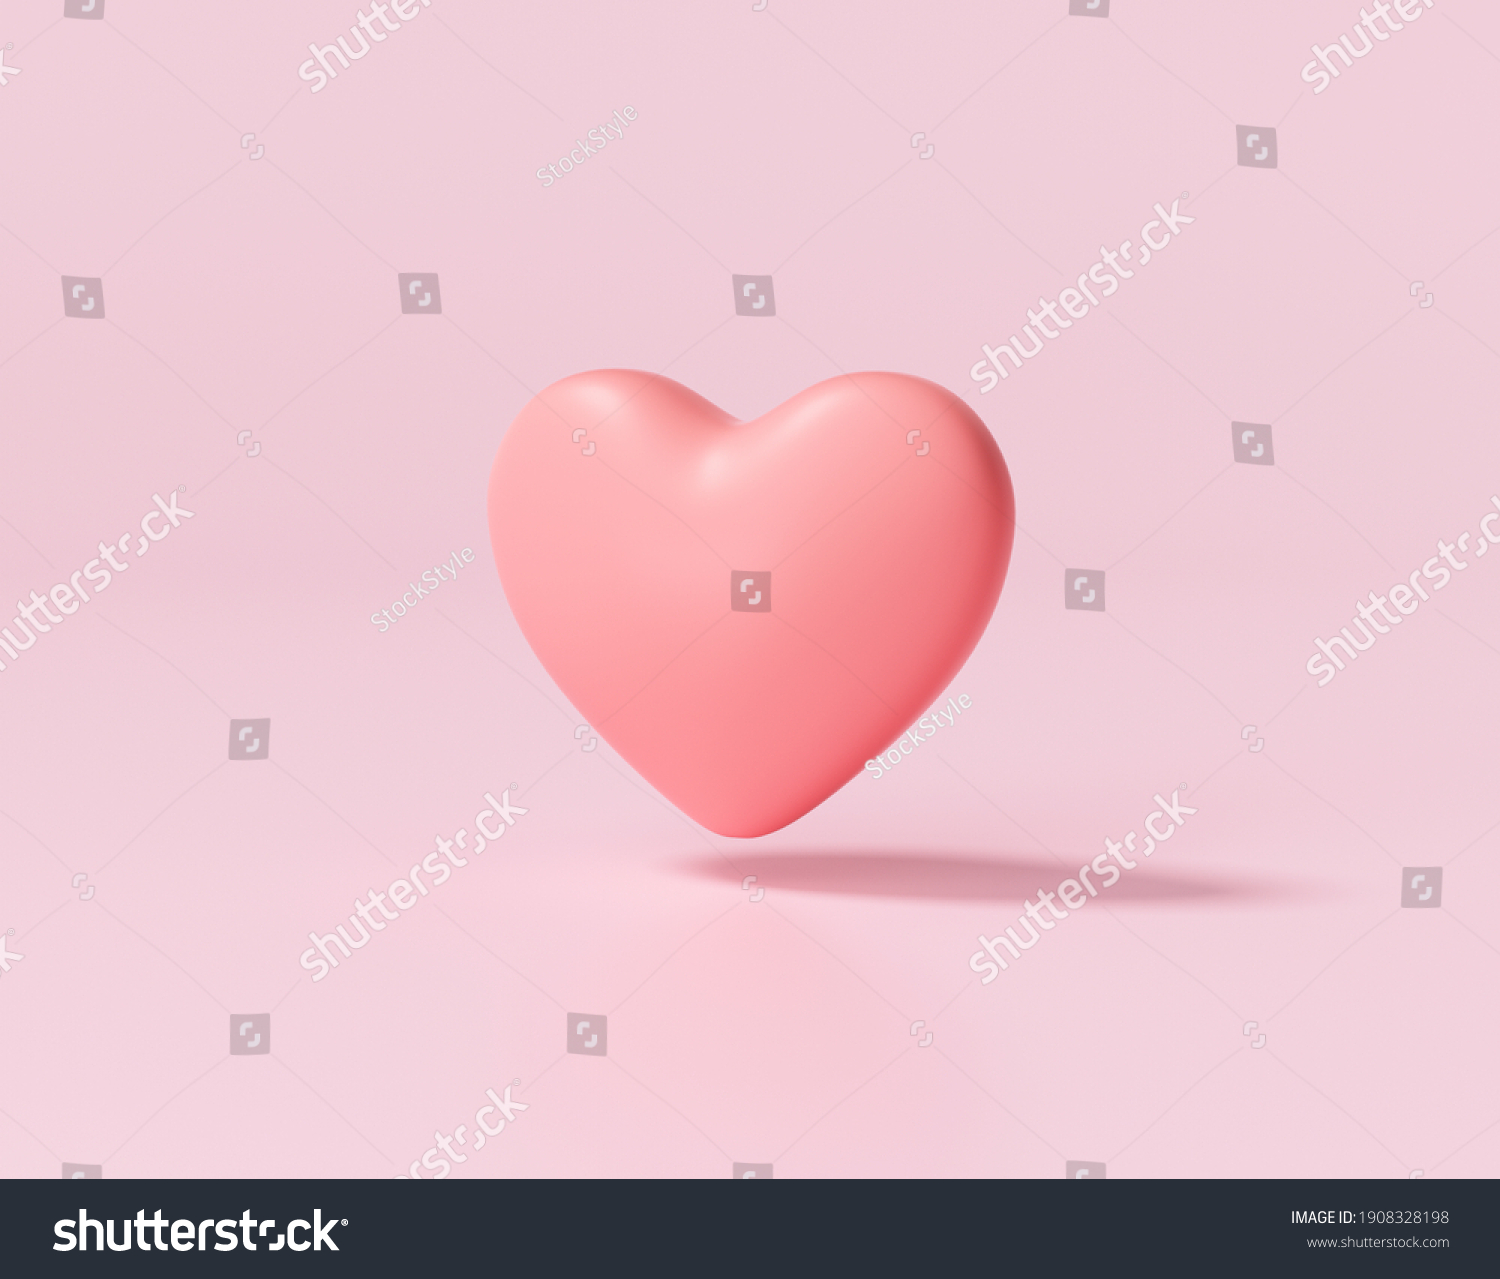 Heart 3d logo Images, Stock Photos & Vectors | Shutterstock